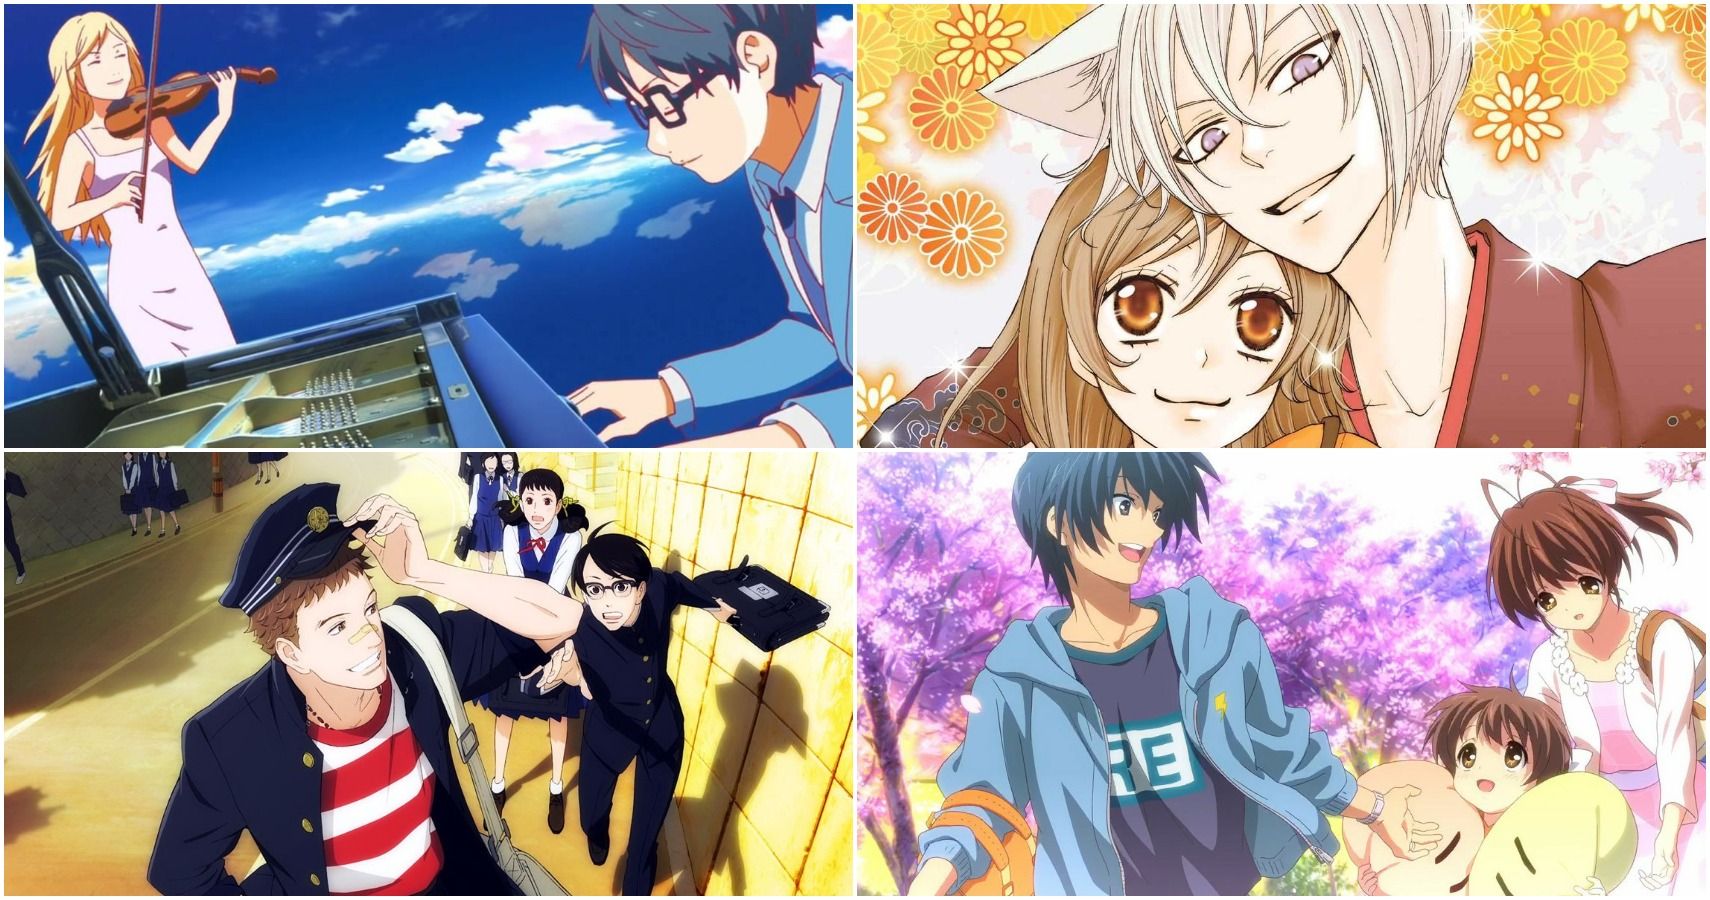 15 Best Romance Anime Series According To Imdb Cbr